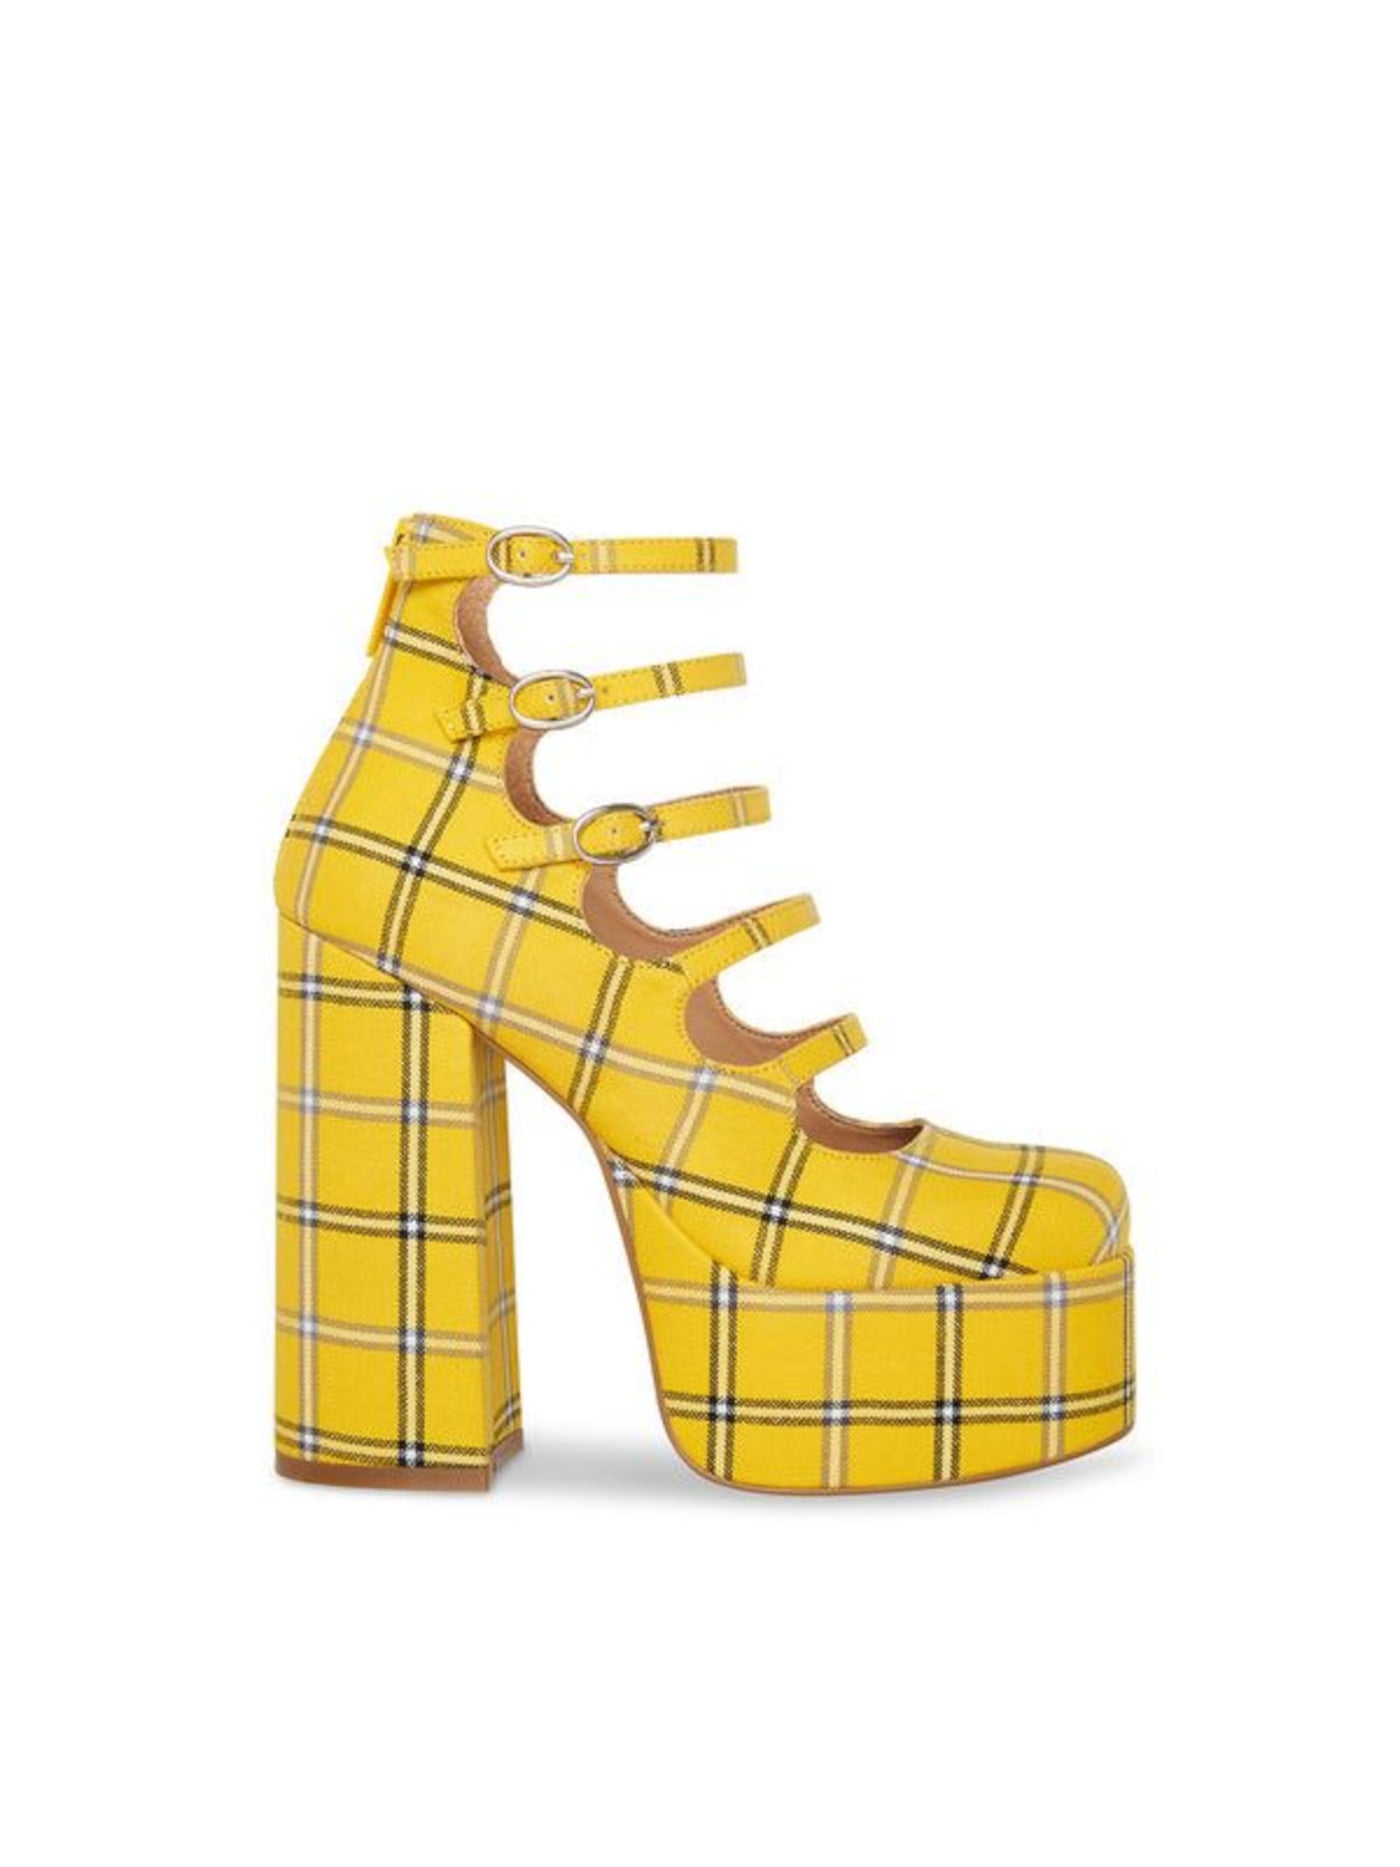 STEVE MADDEN Womens Yellow Plaid 3" Platform Adjustable Round Toe Block Heel Zip-Up Dress Pumps Shoes 8 M